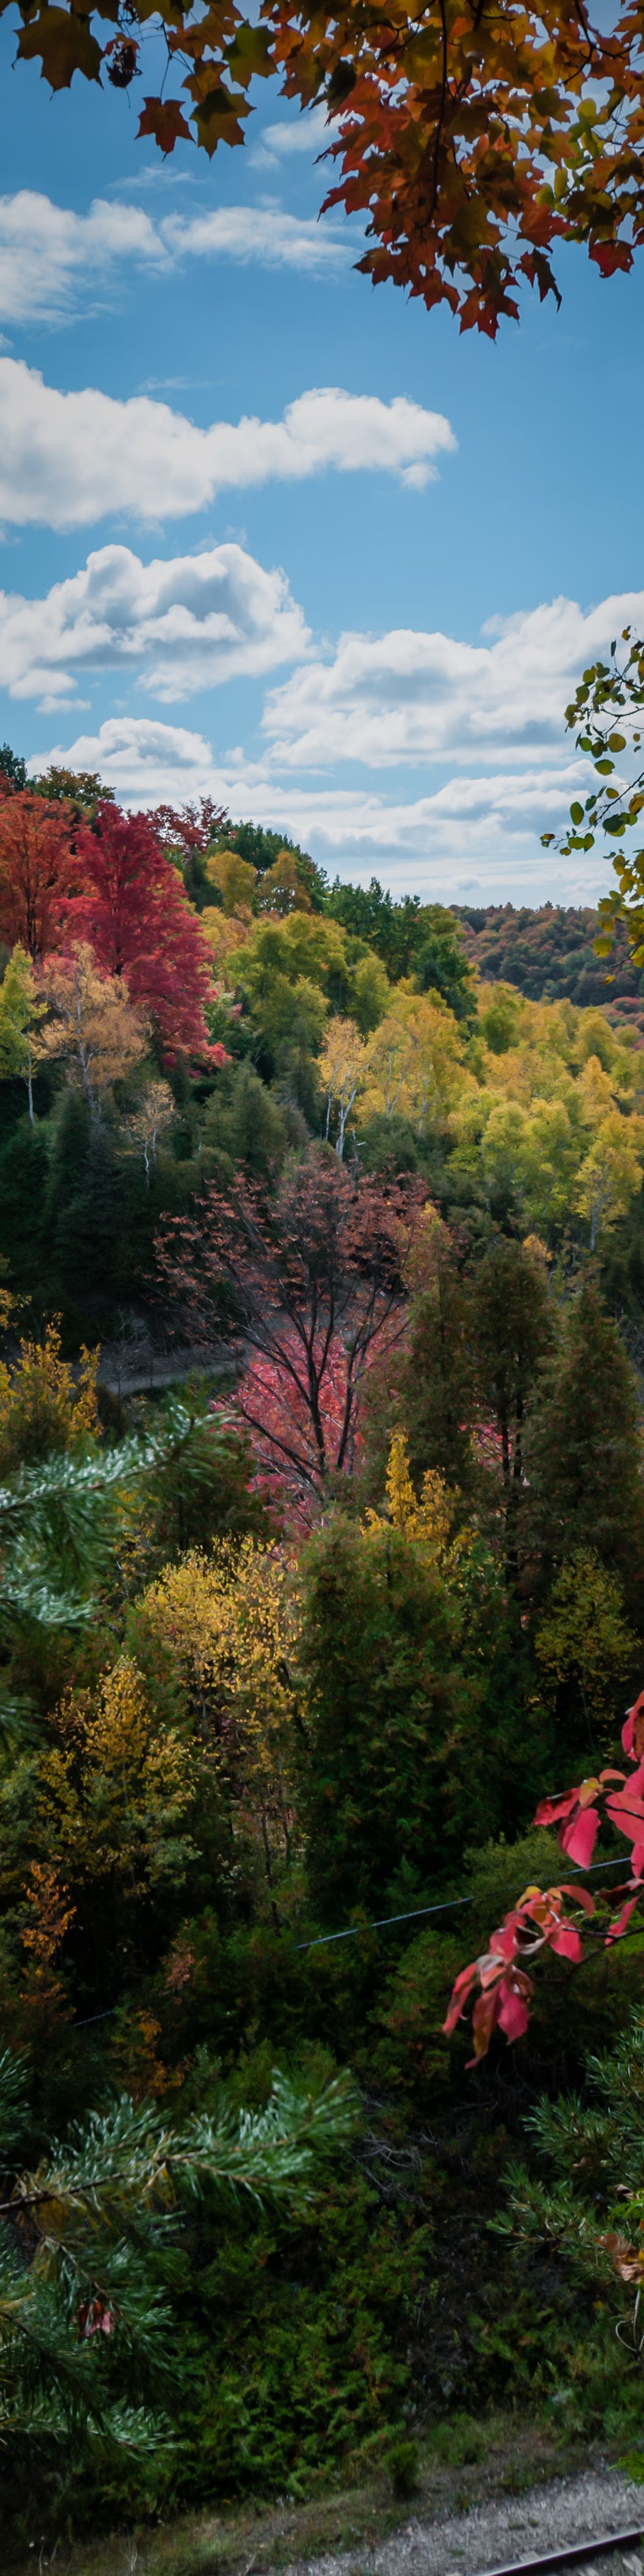 Fall colors – Caledon, Ontario  Copyright Jeff E. Smith  cropped for Pinterest